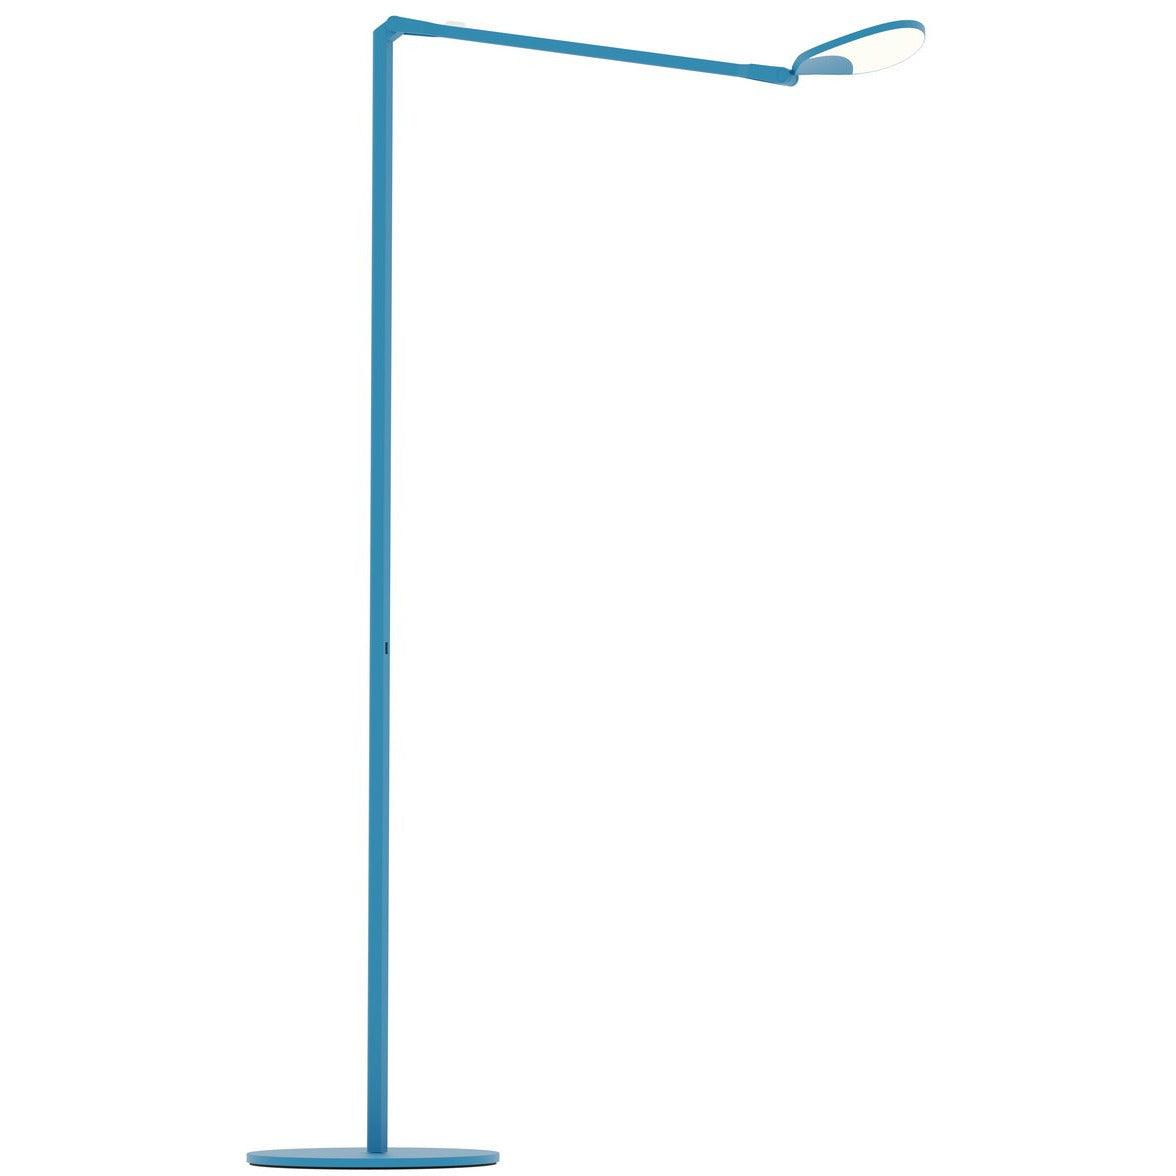 Koncept Lady Floor Lamp with USB Charging Port in Metallic Black, L7-MBK-FLR - 1